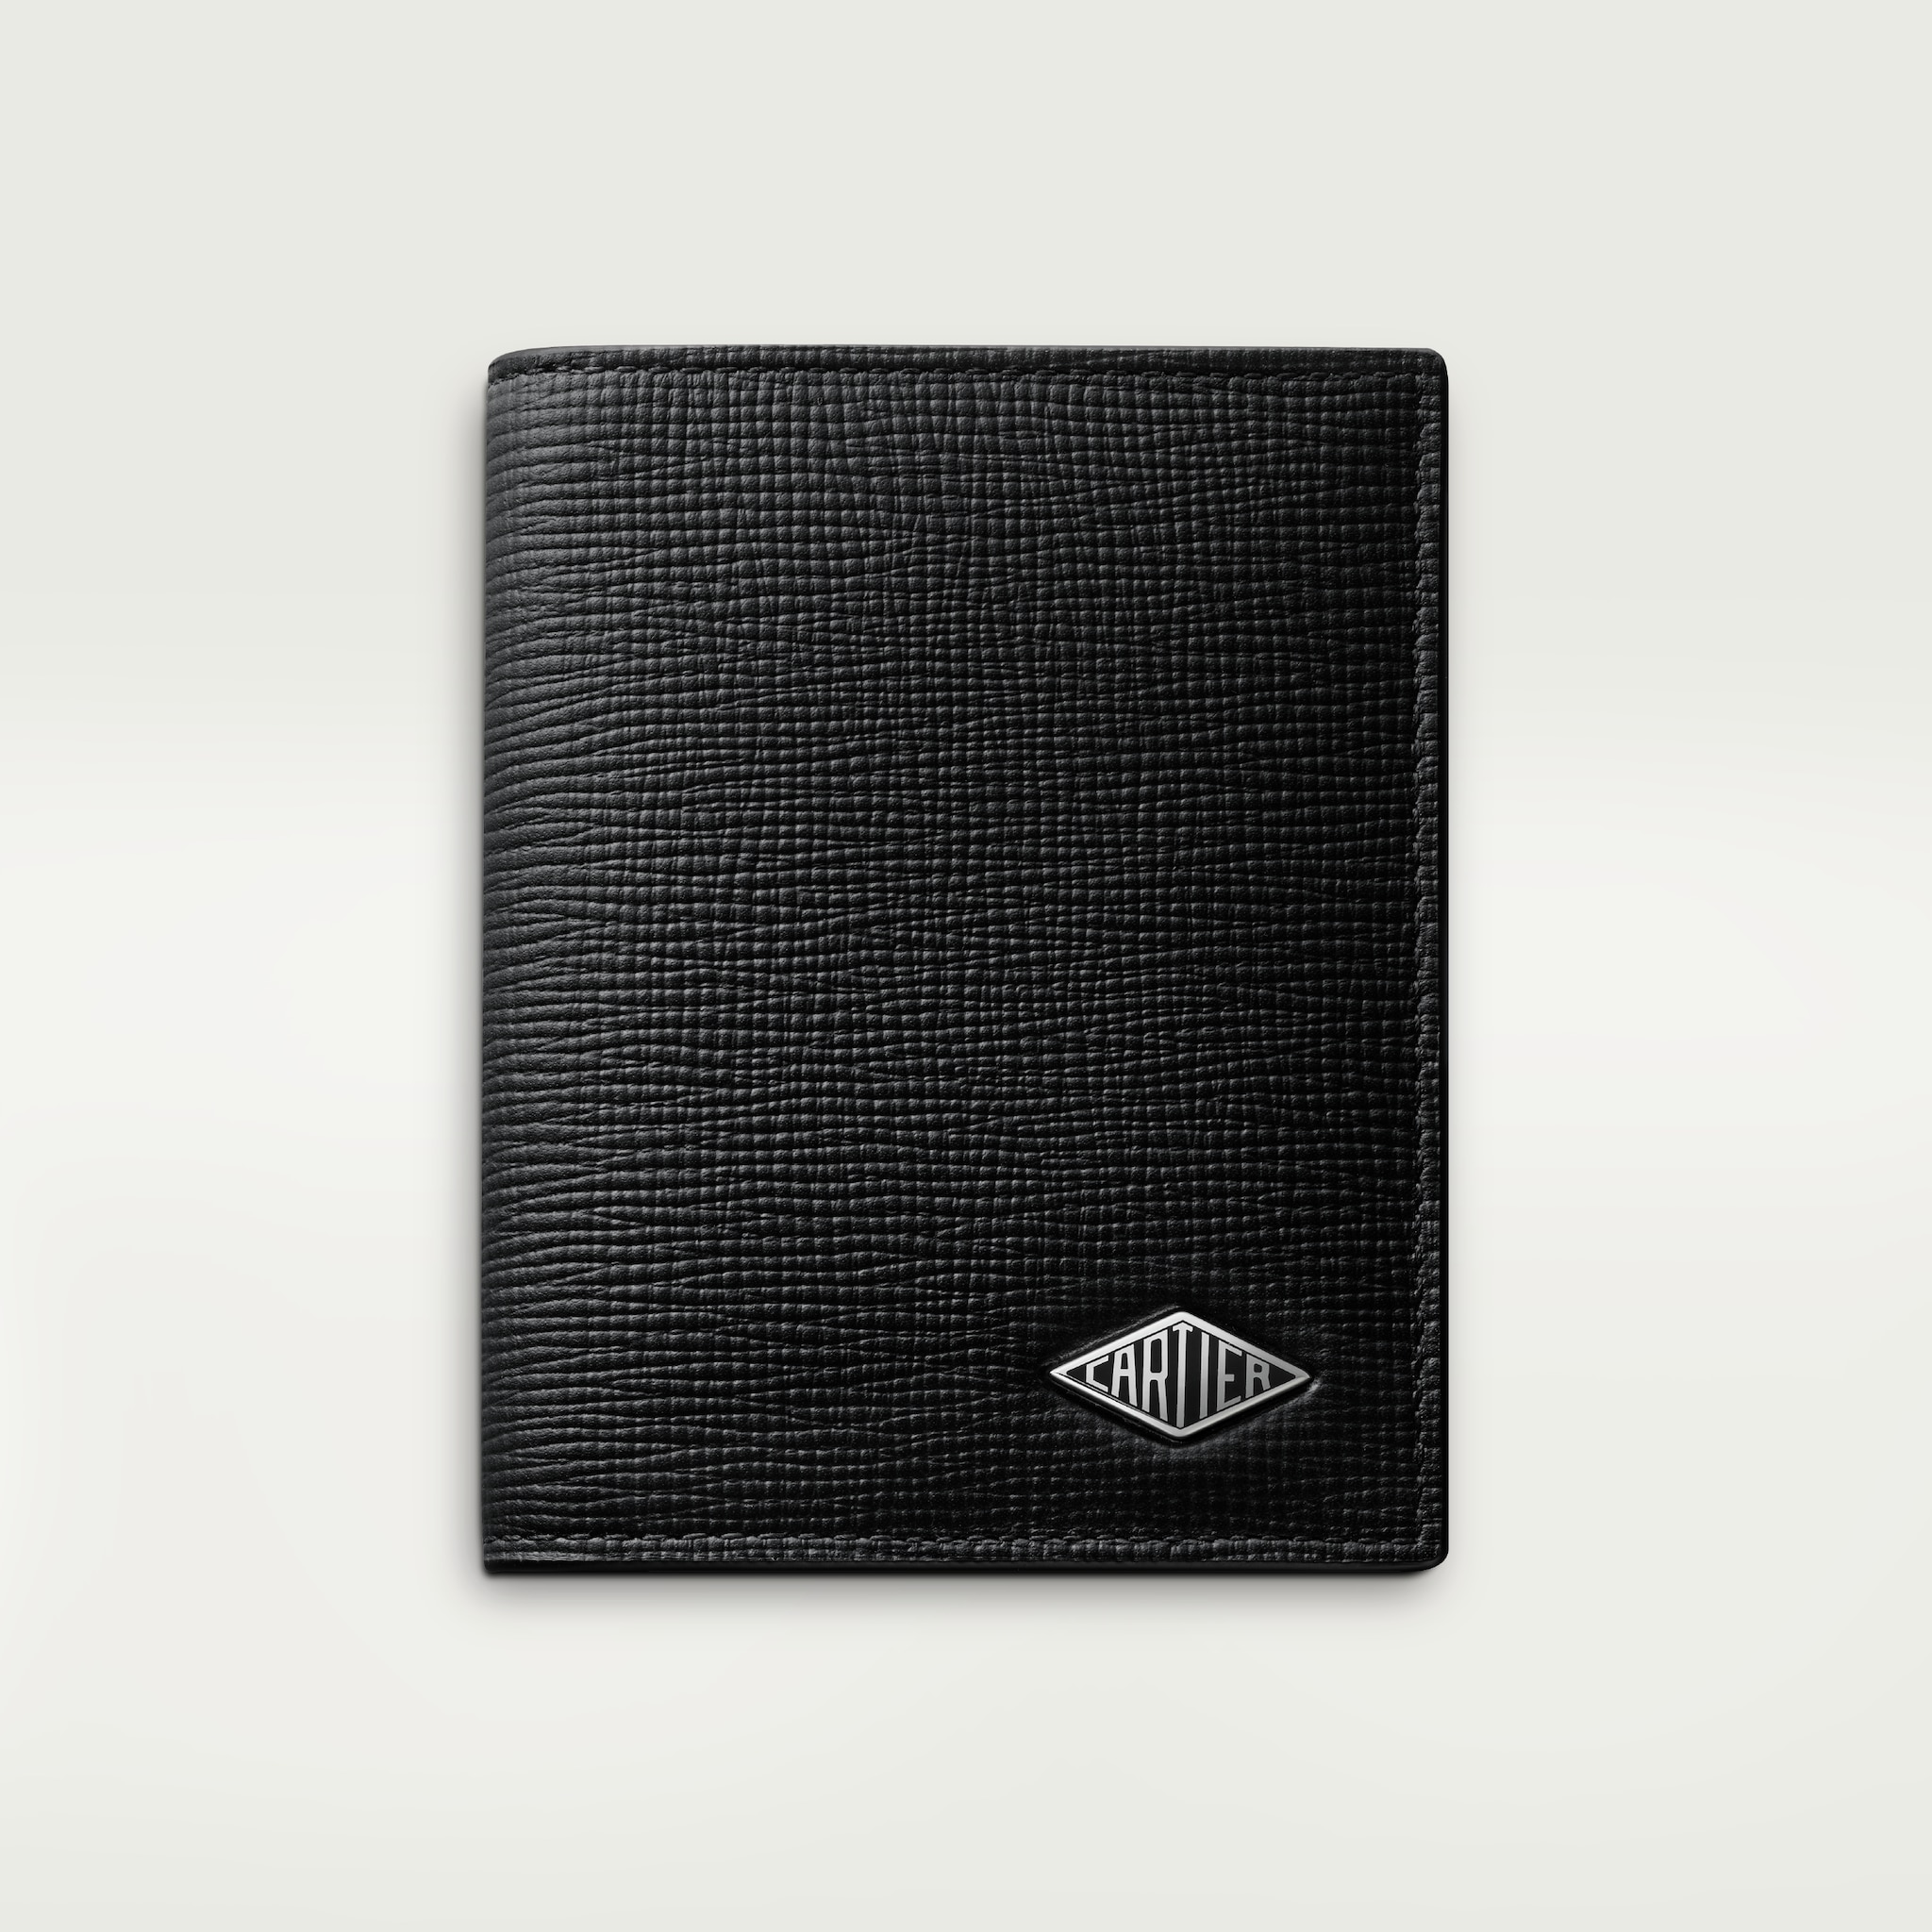 Four-credit card holder, Cartier LosangeGrained black calfskin, black enamel and palladium finish